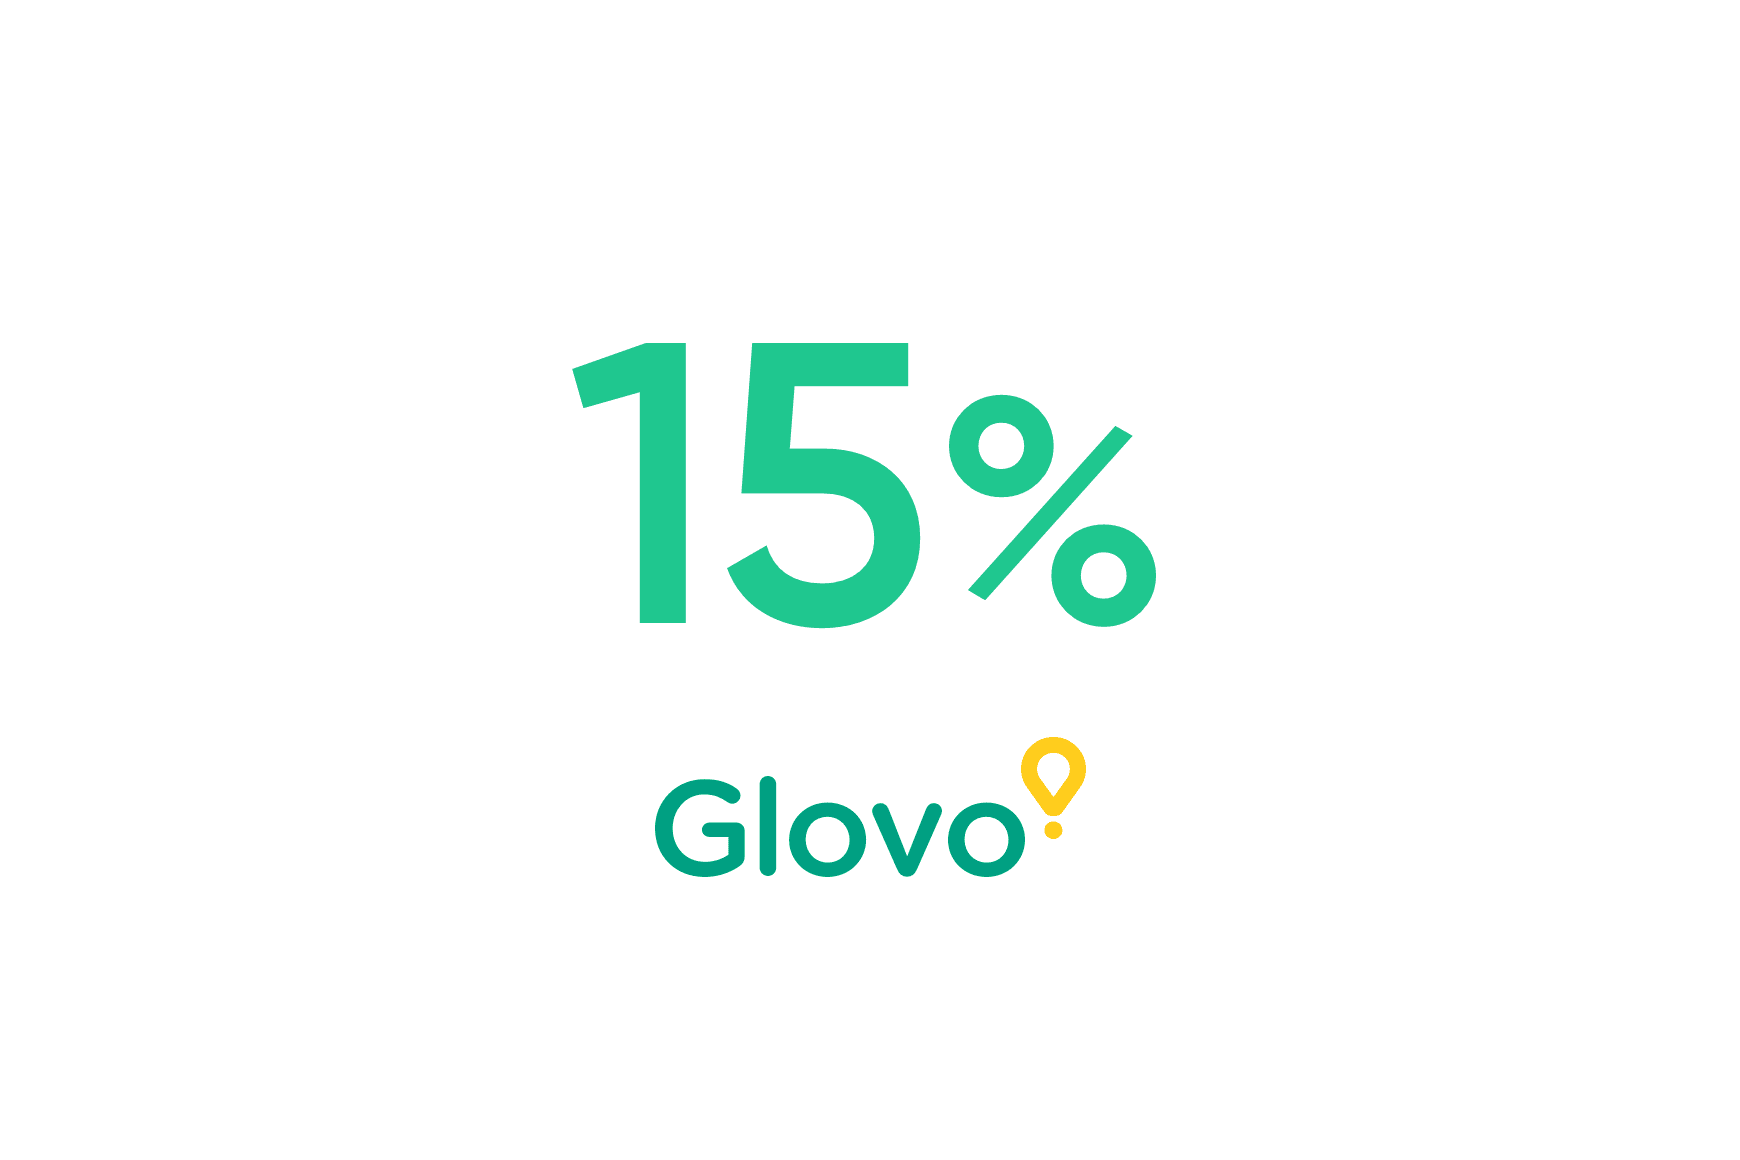 Glovo: 15% reduction in AVHT for inbound calls